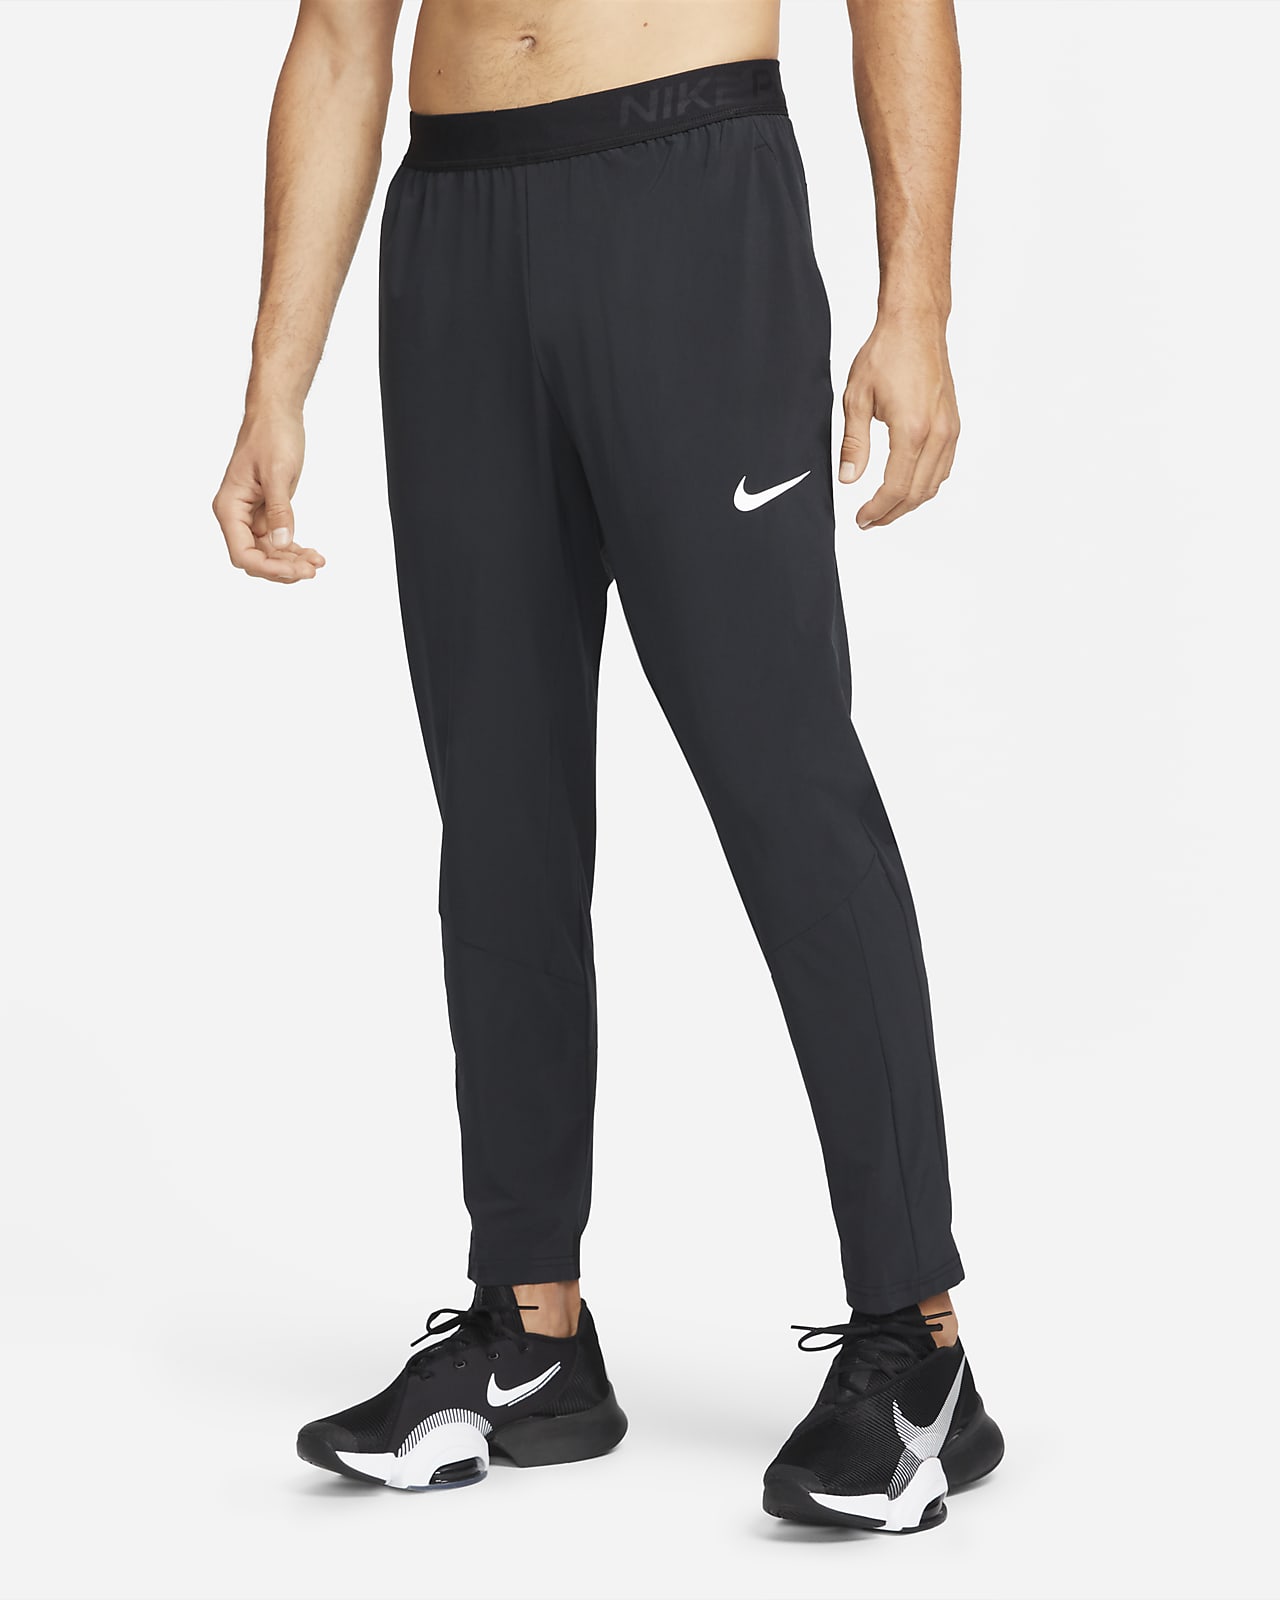 Pantaloni Nike Donna: acquista da Maxi Sport